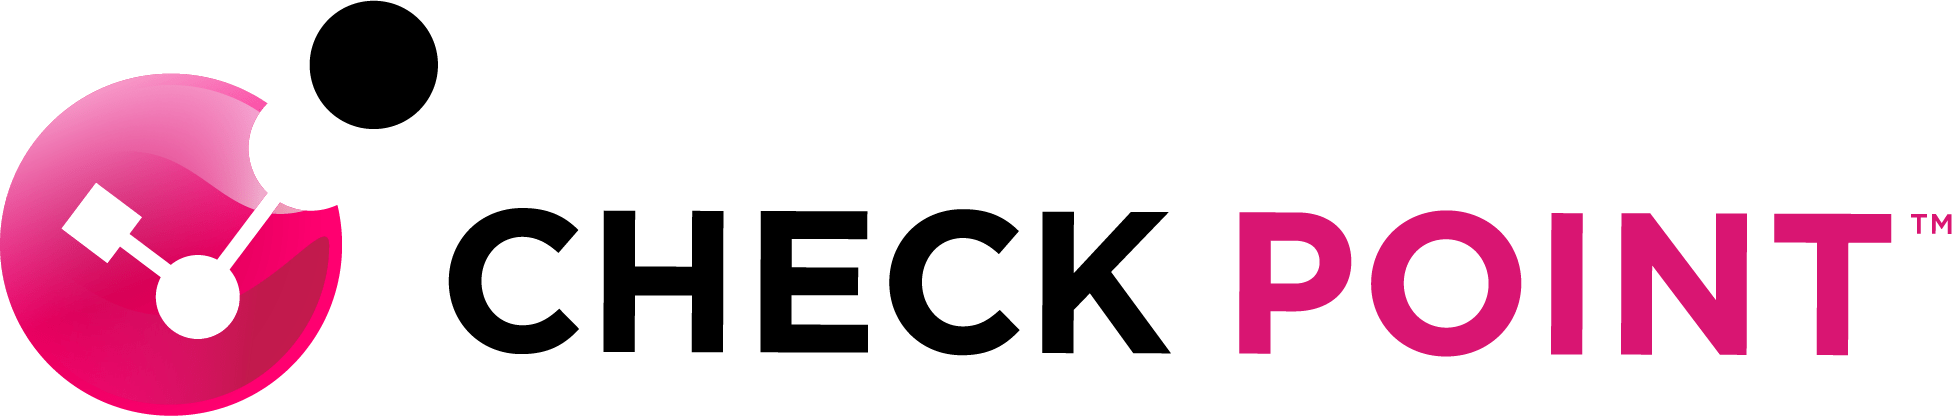 CheckPoint logo-min